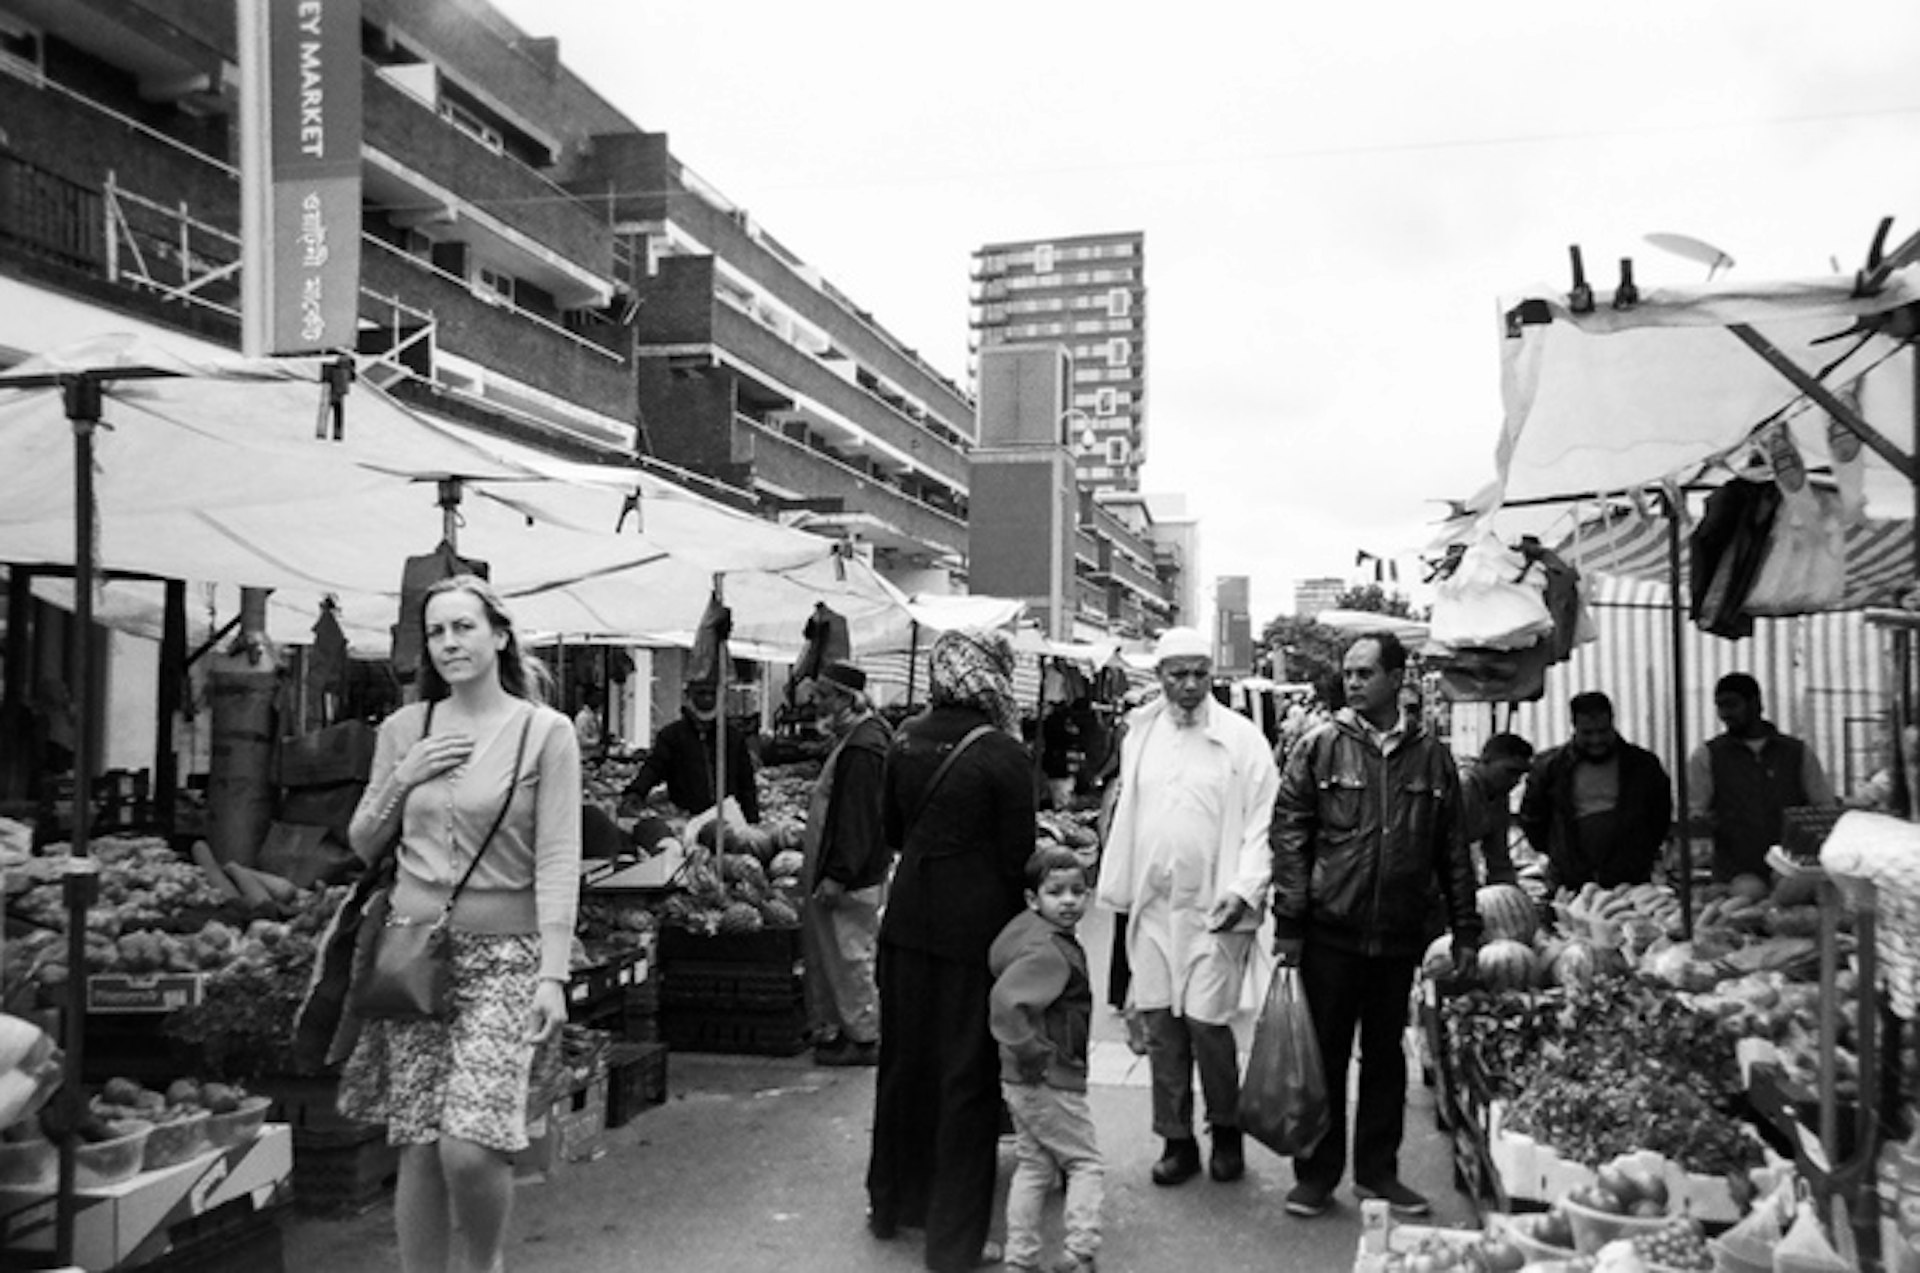 Market Scene by Goska Calik